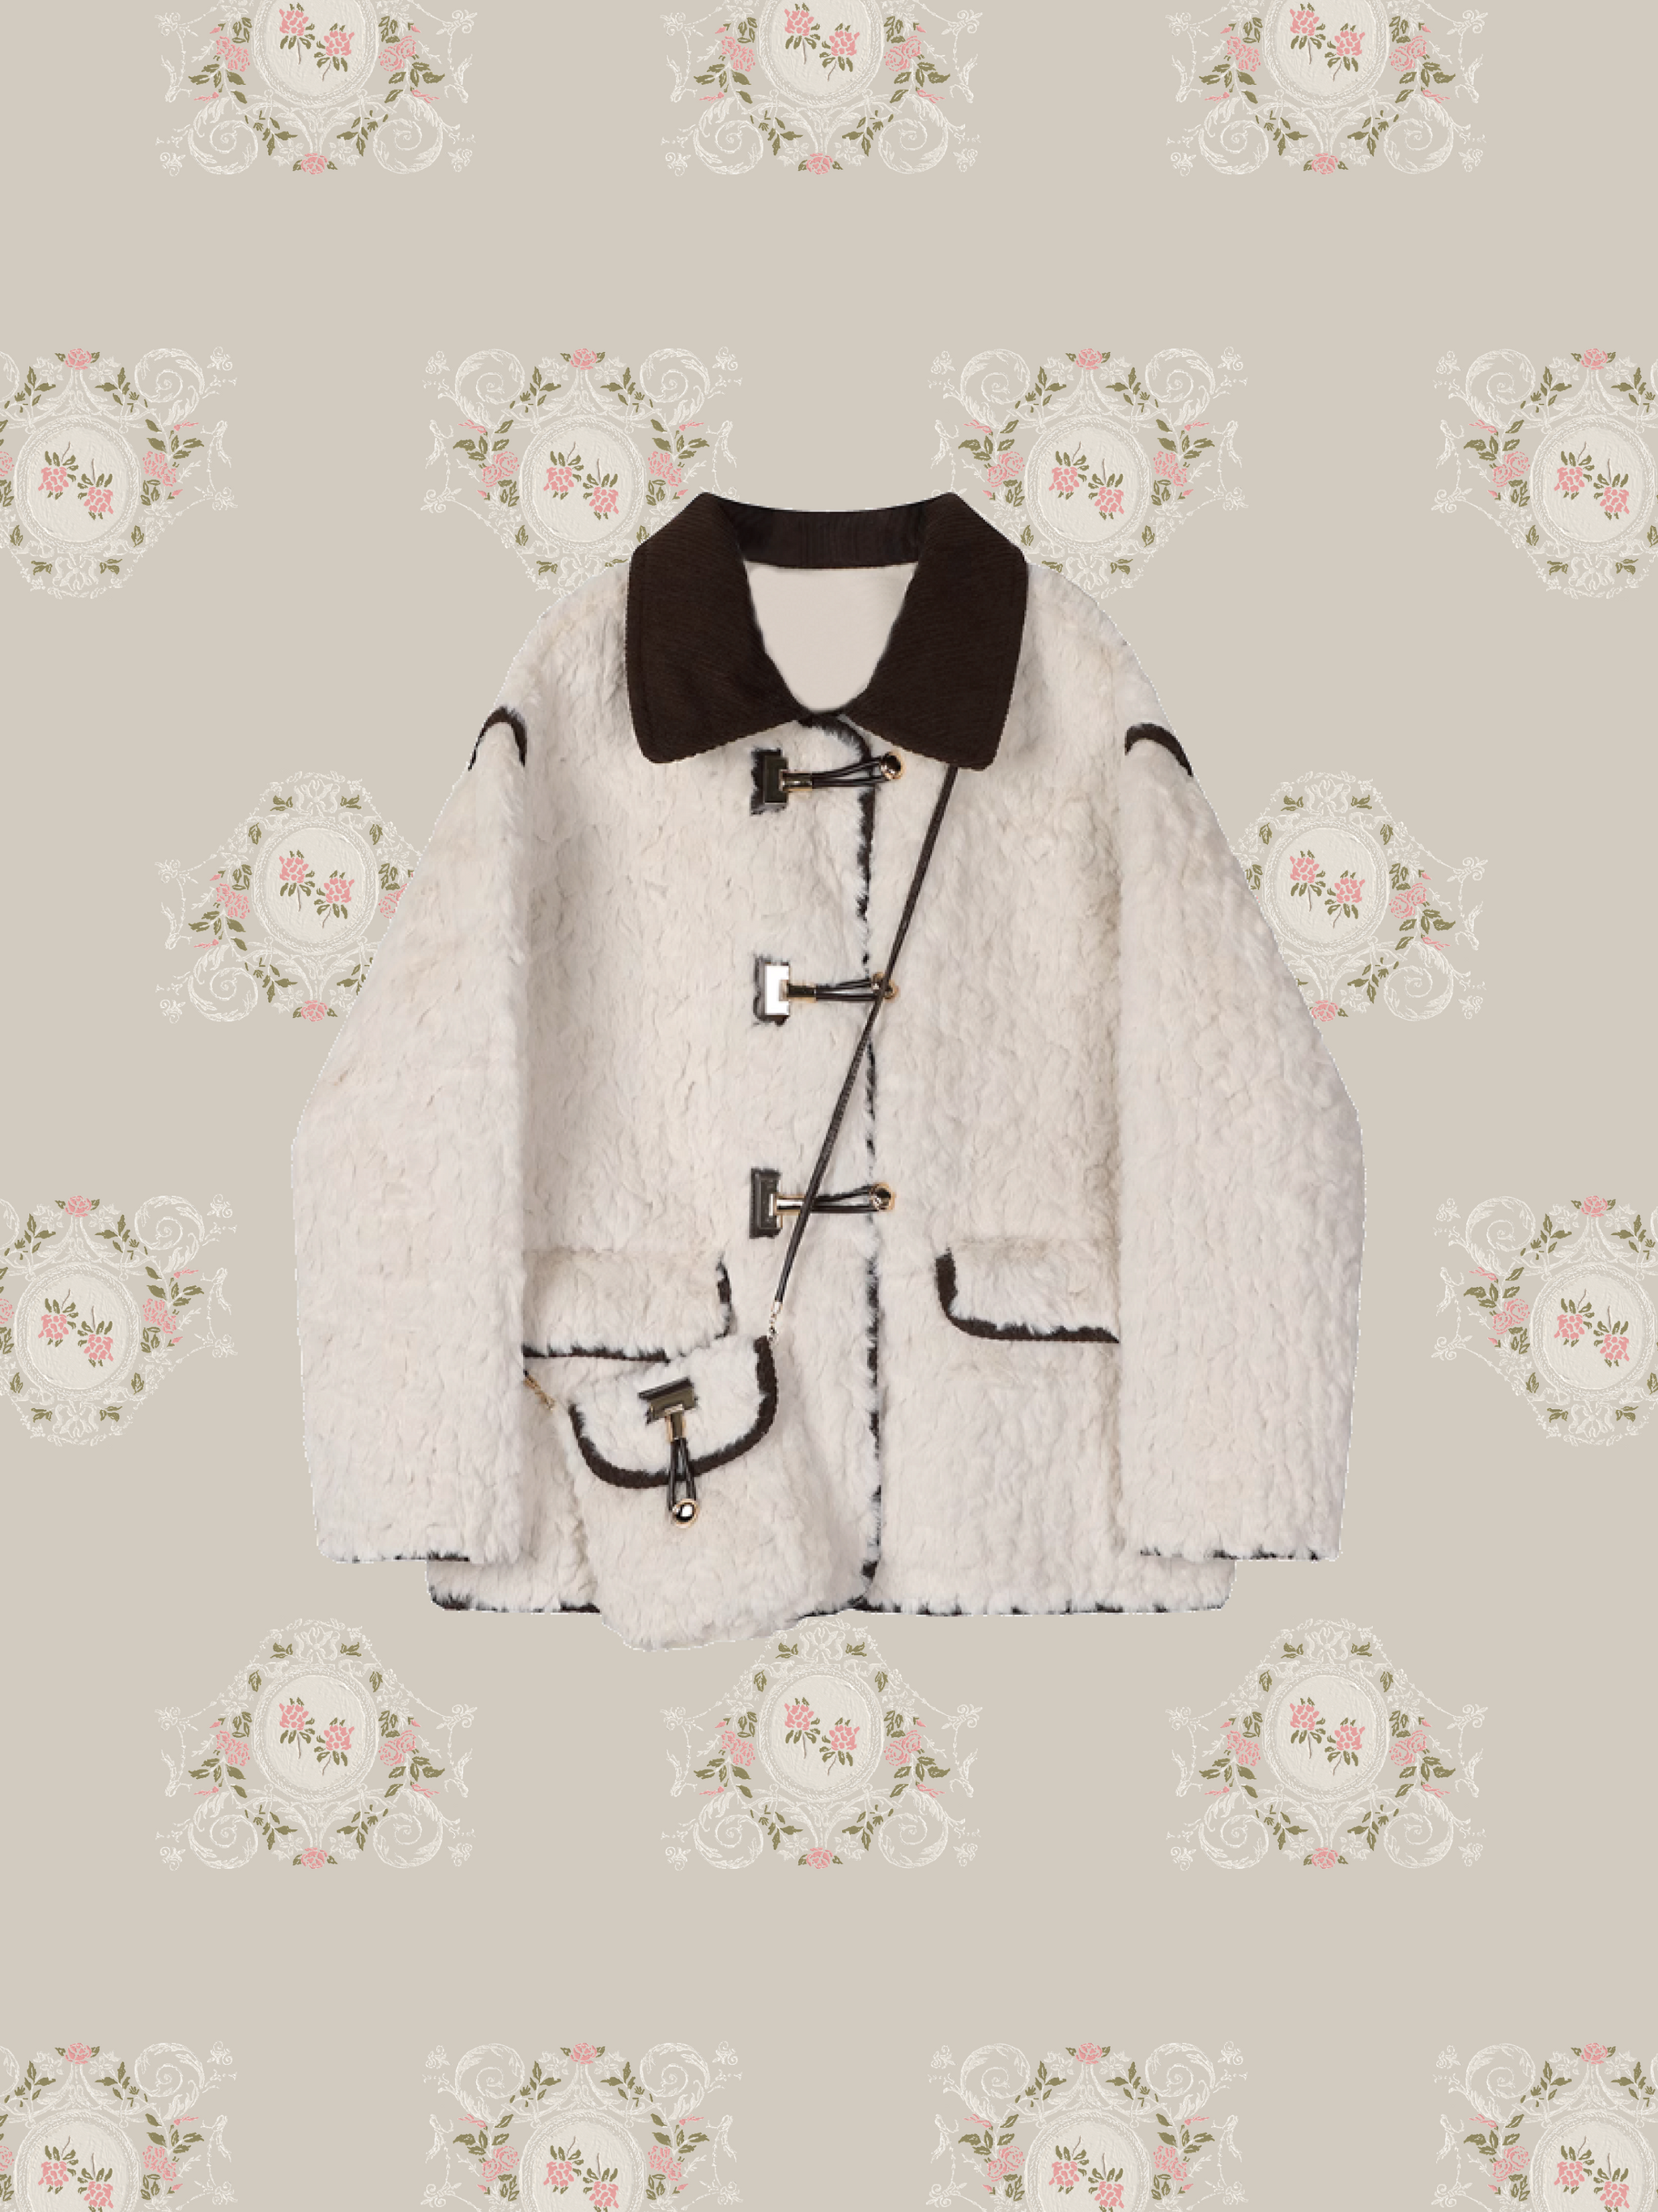 Fluffy Shearling Fur Coat With Mini Bag. ふわふわムートンファー